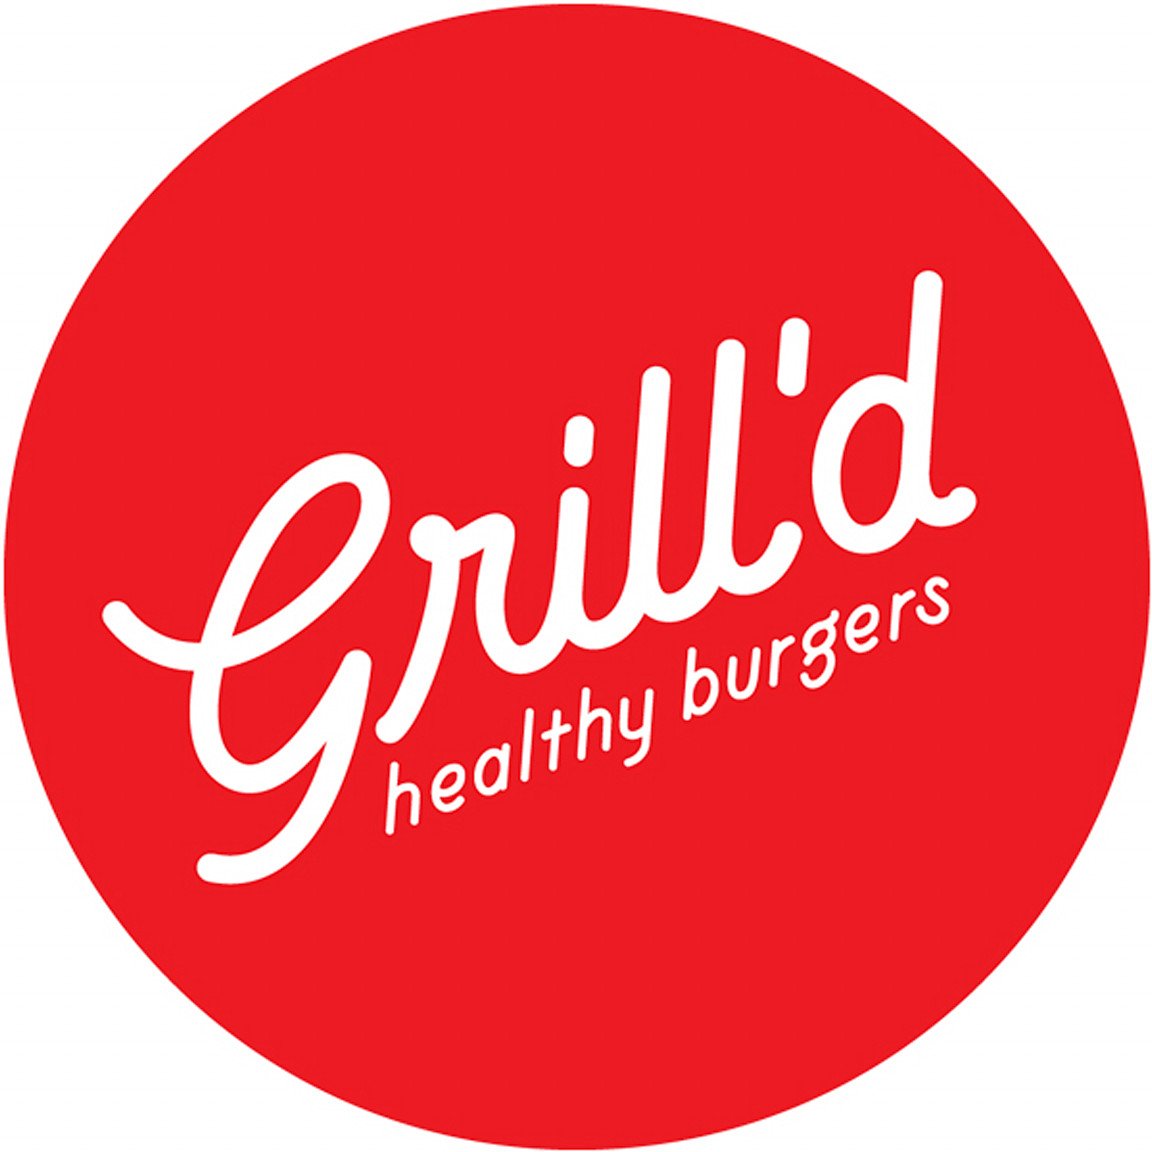 grilld logo.jpg